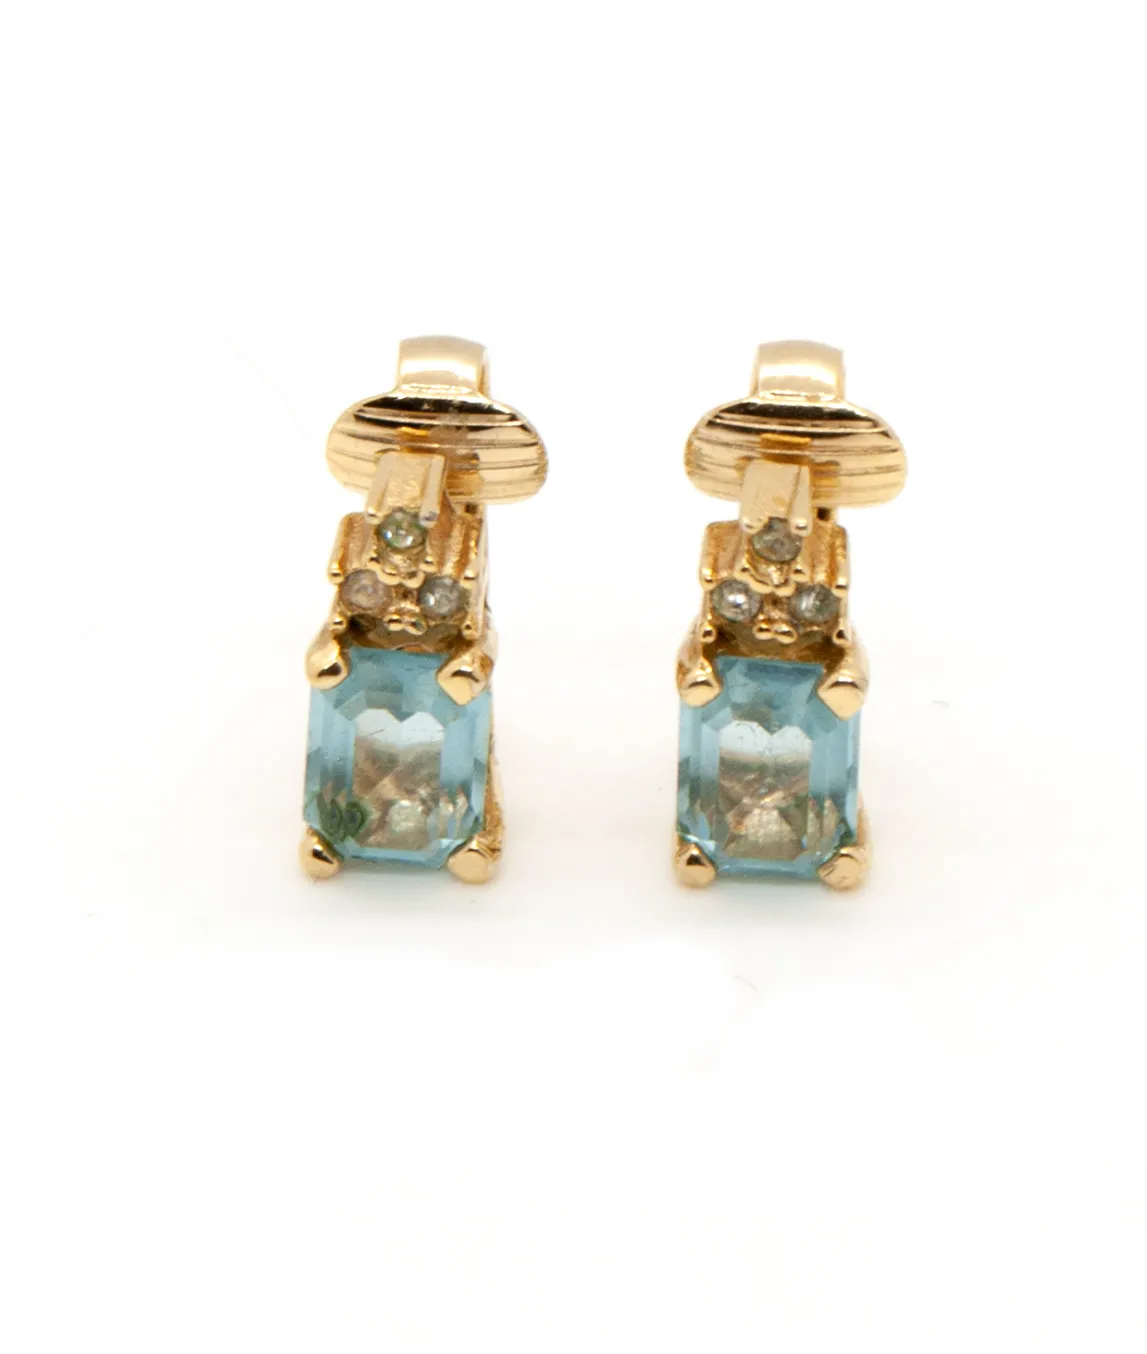 Vintage Christian Dior clip earrings